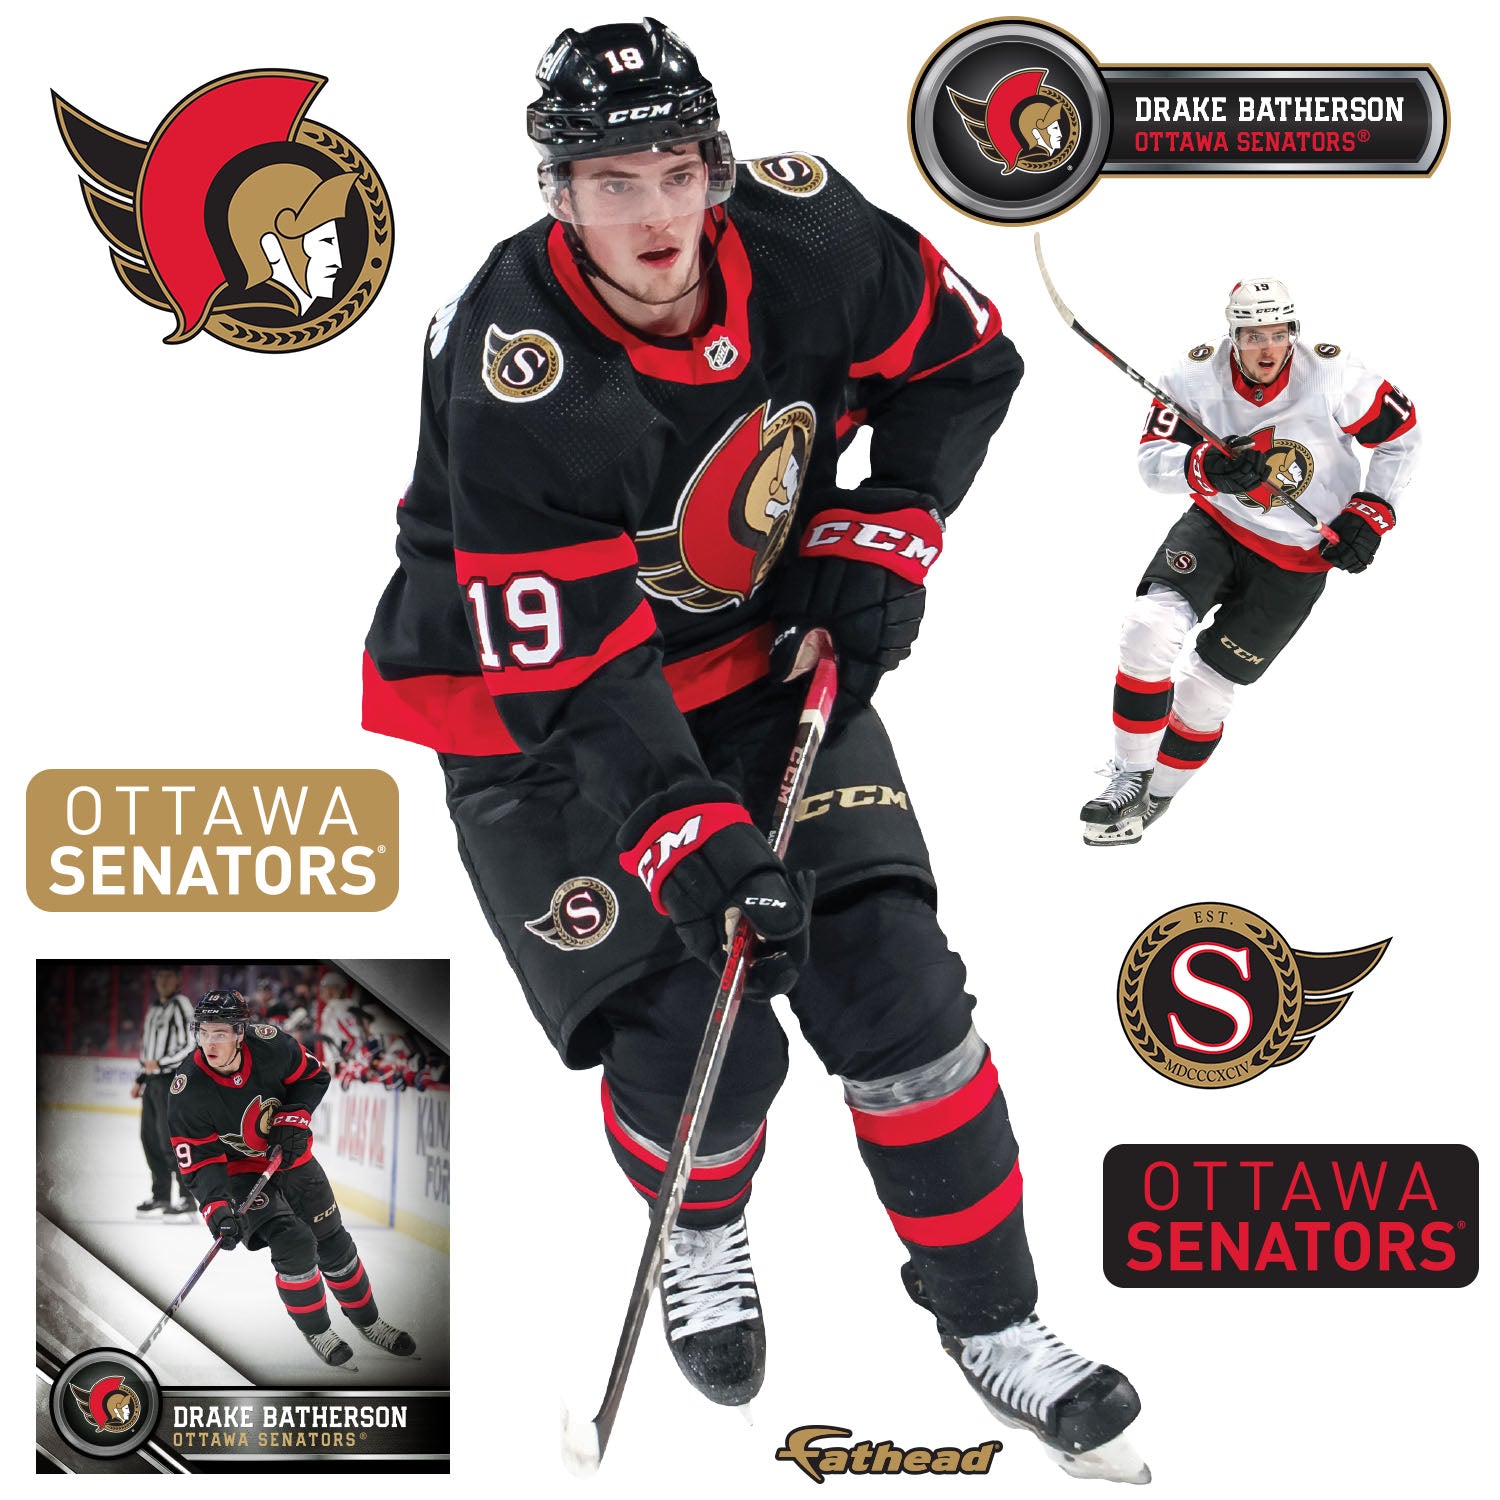 Drake Batherson, Ottawa Senators, RW - News, Stats, Bio